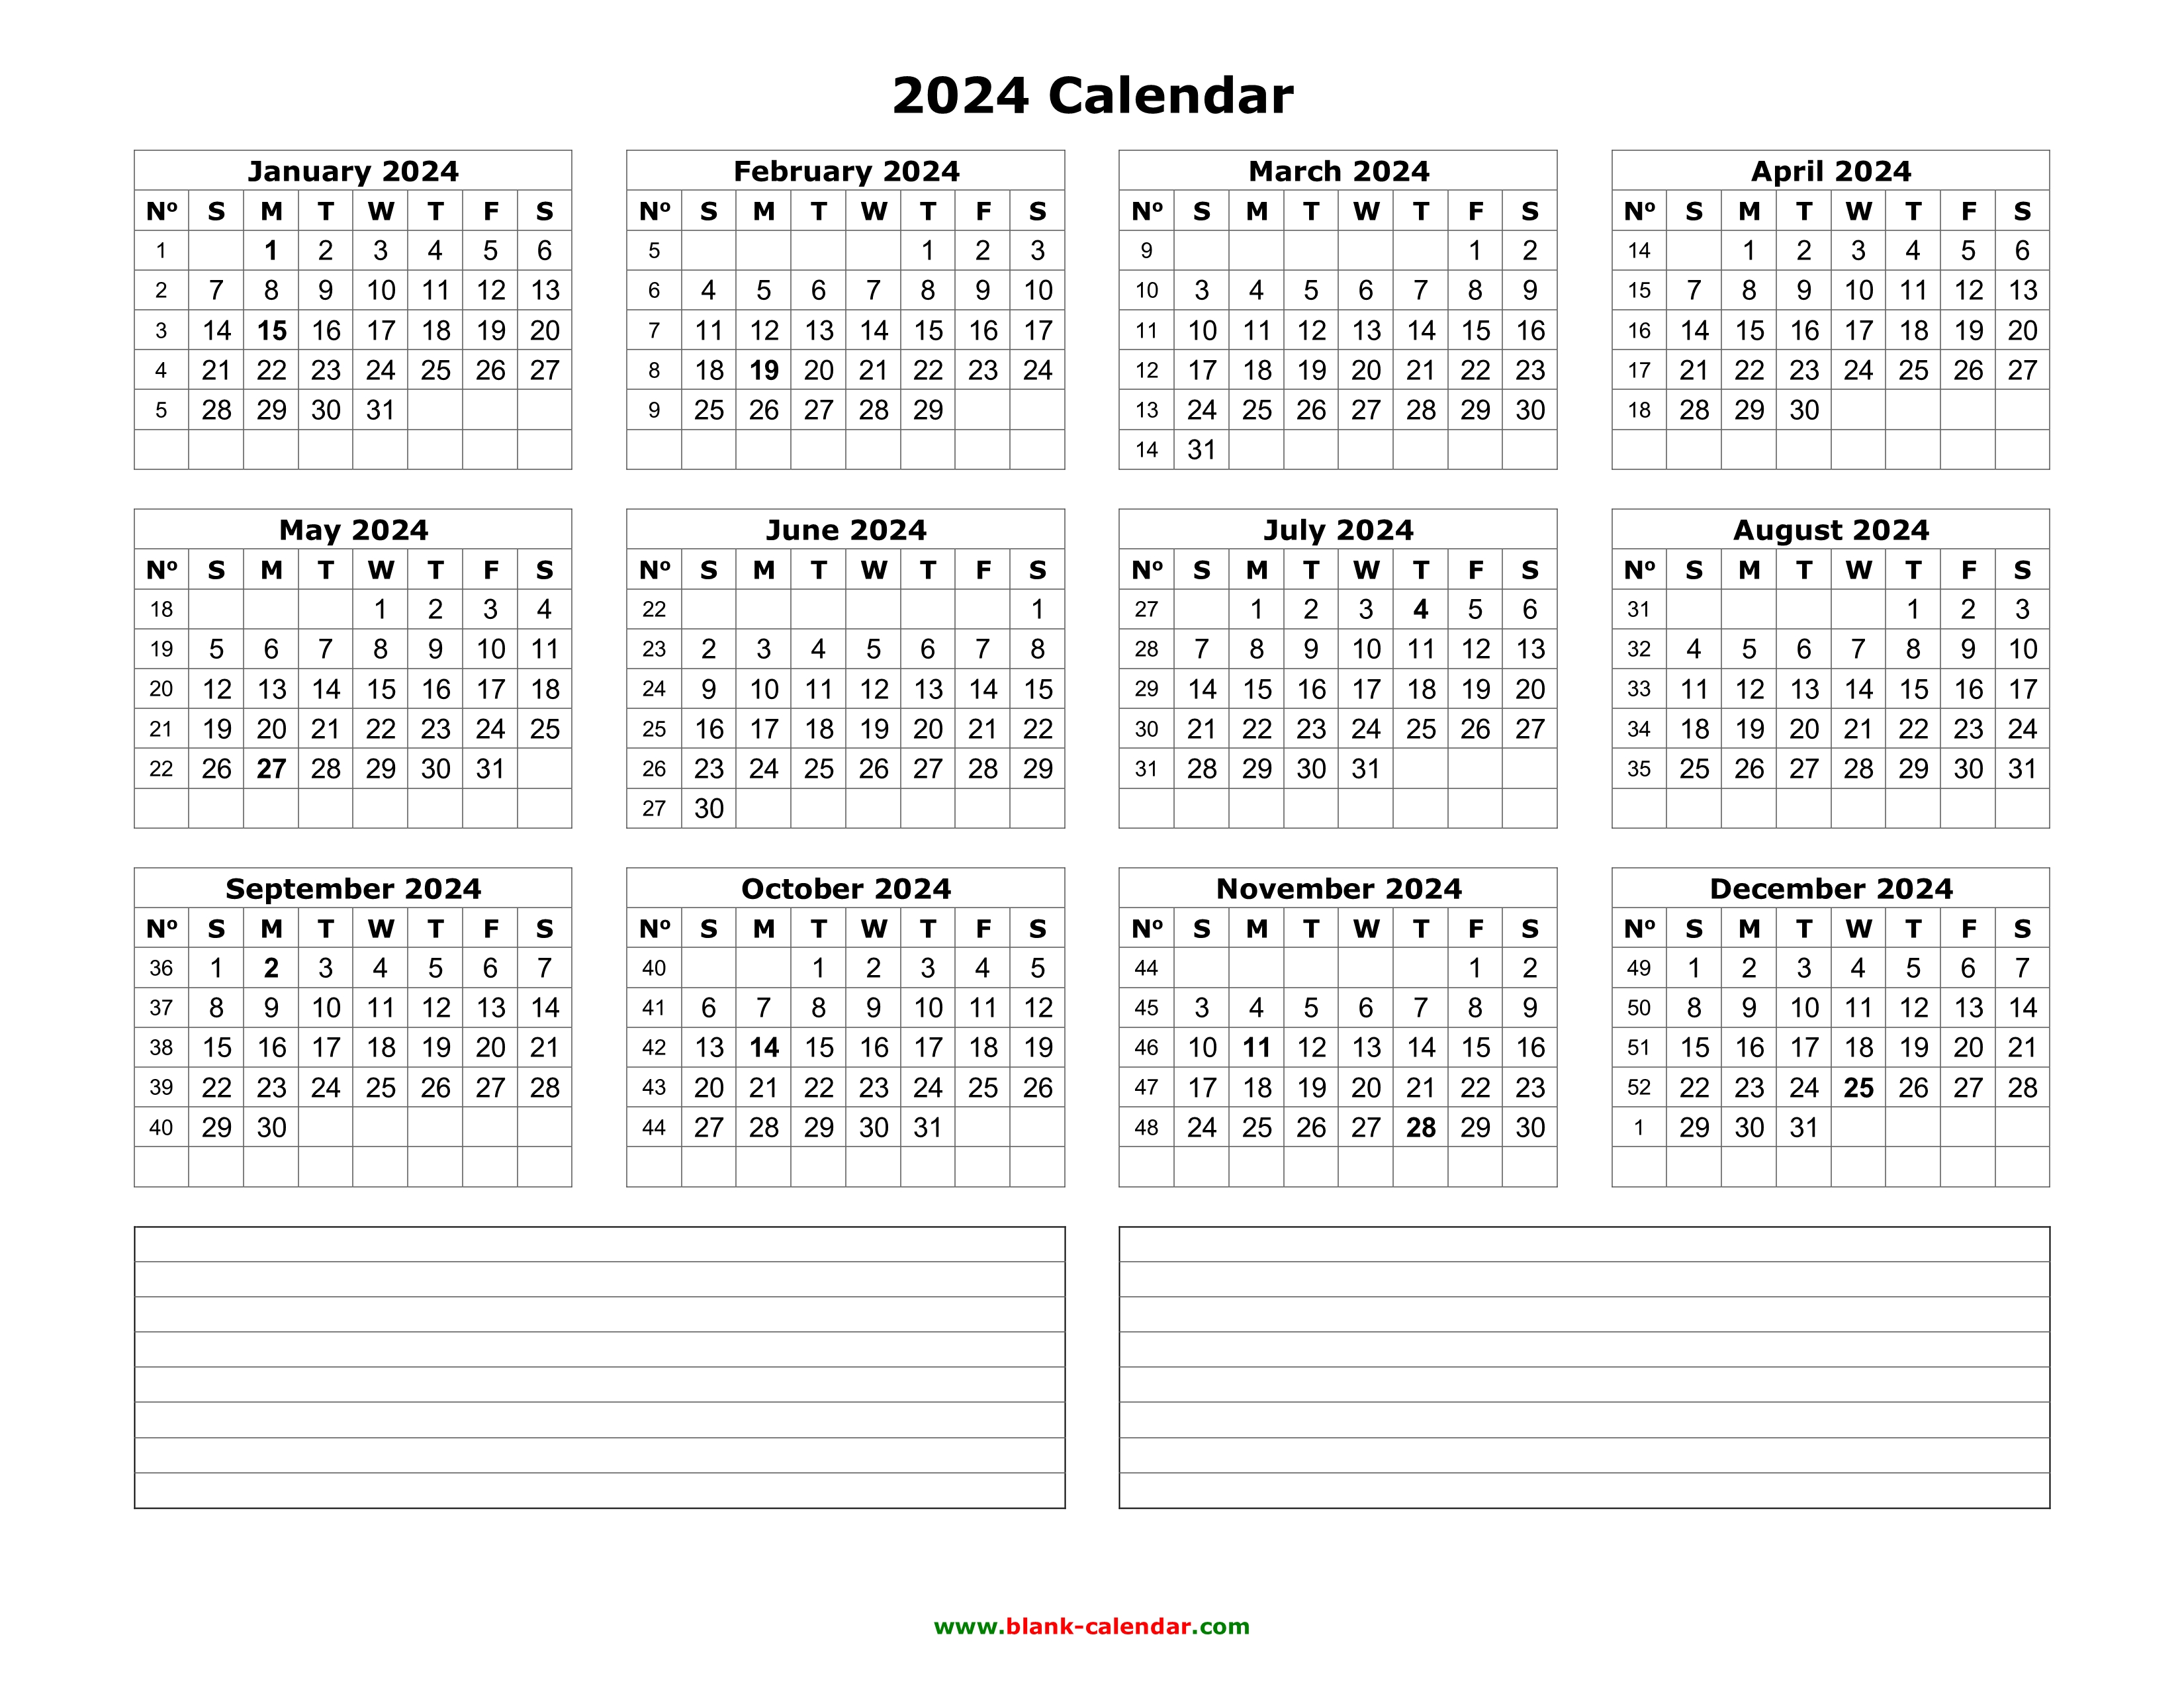 2024 Calendar 2024 Printable Blank - 2024 CALENDAR PRINTABLE